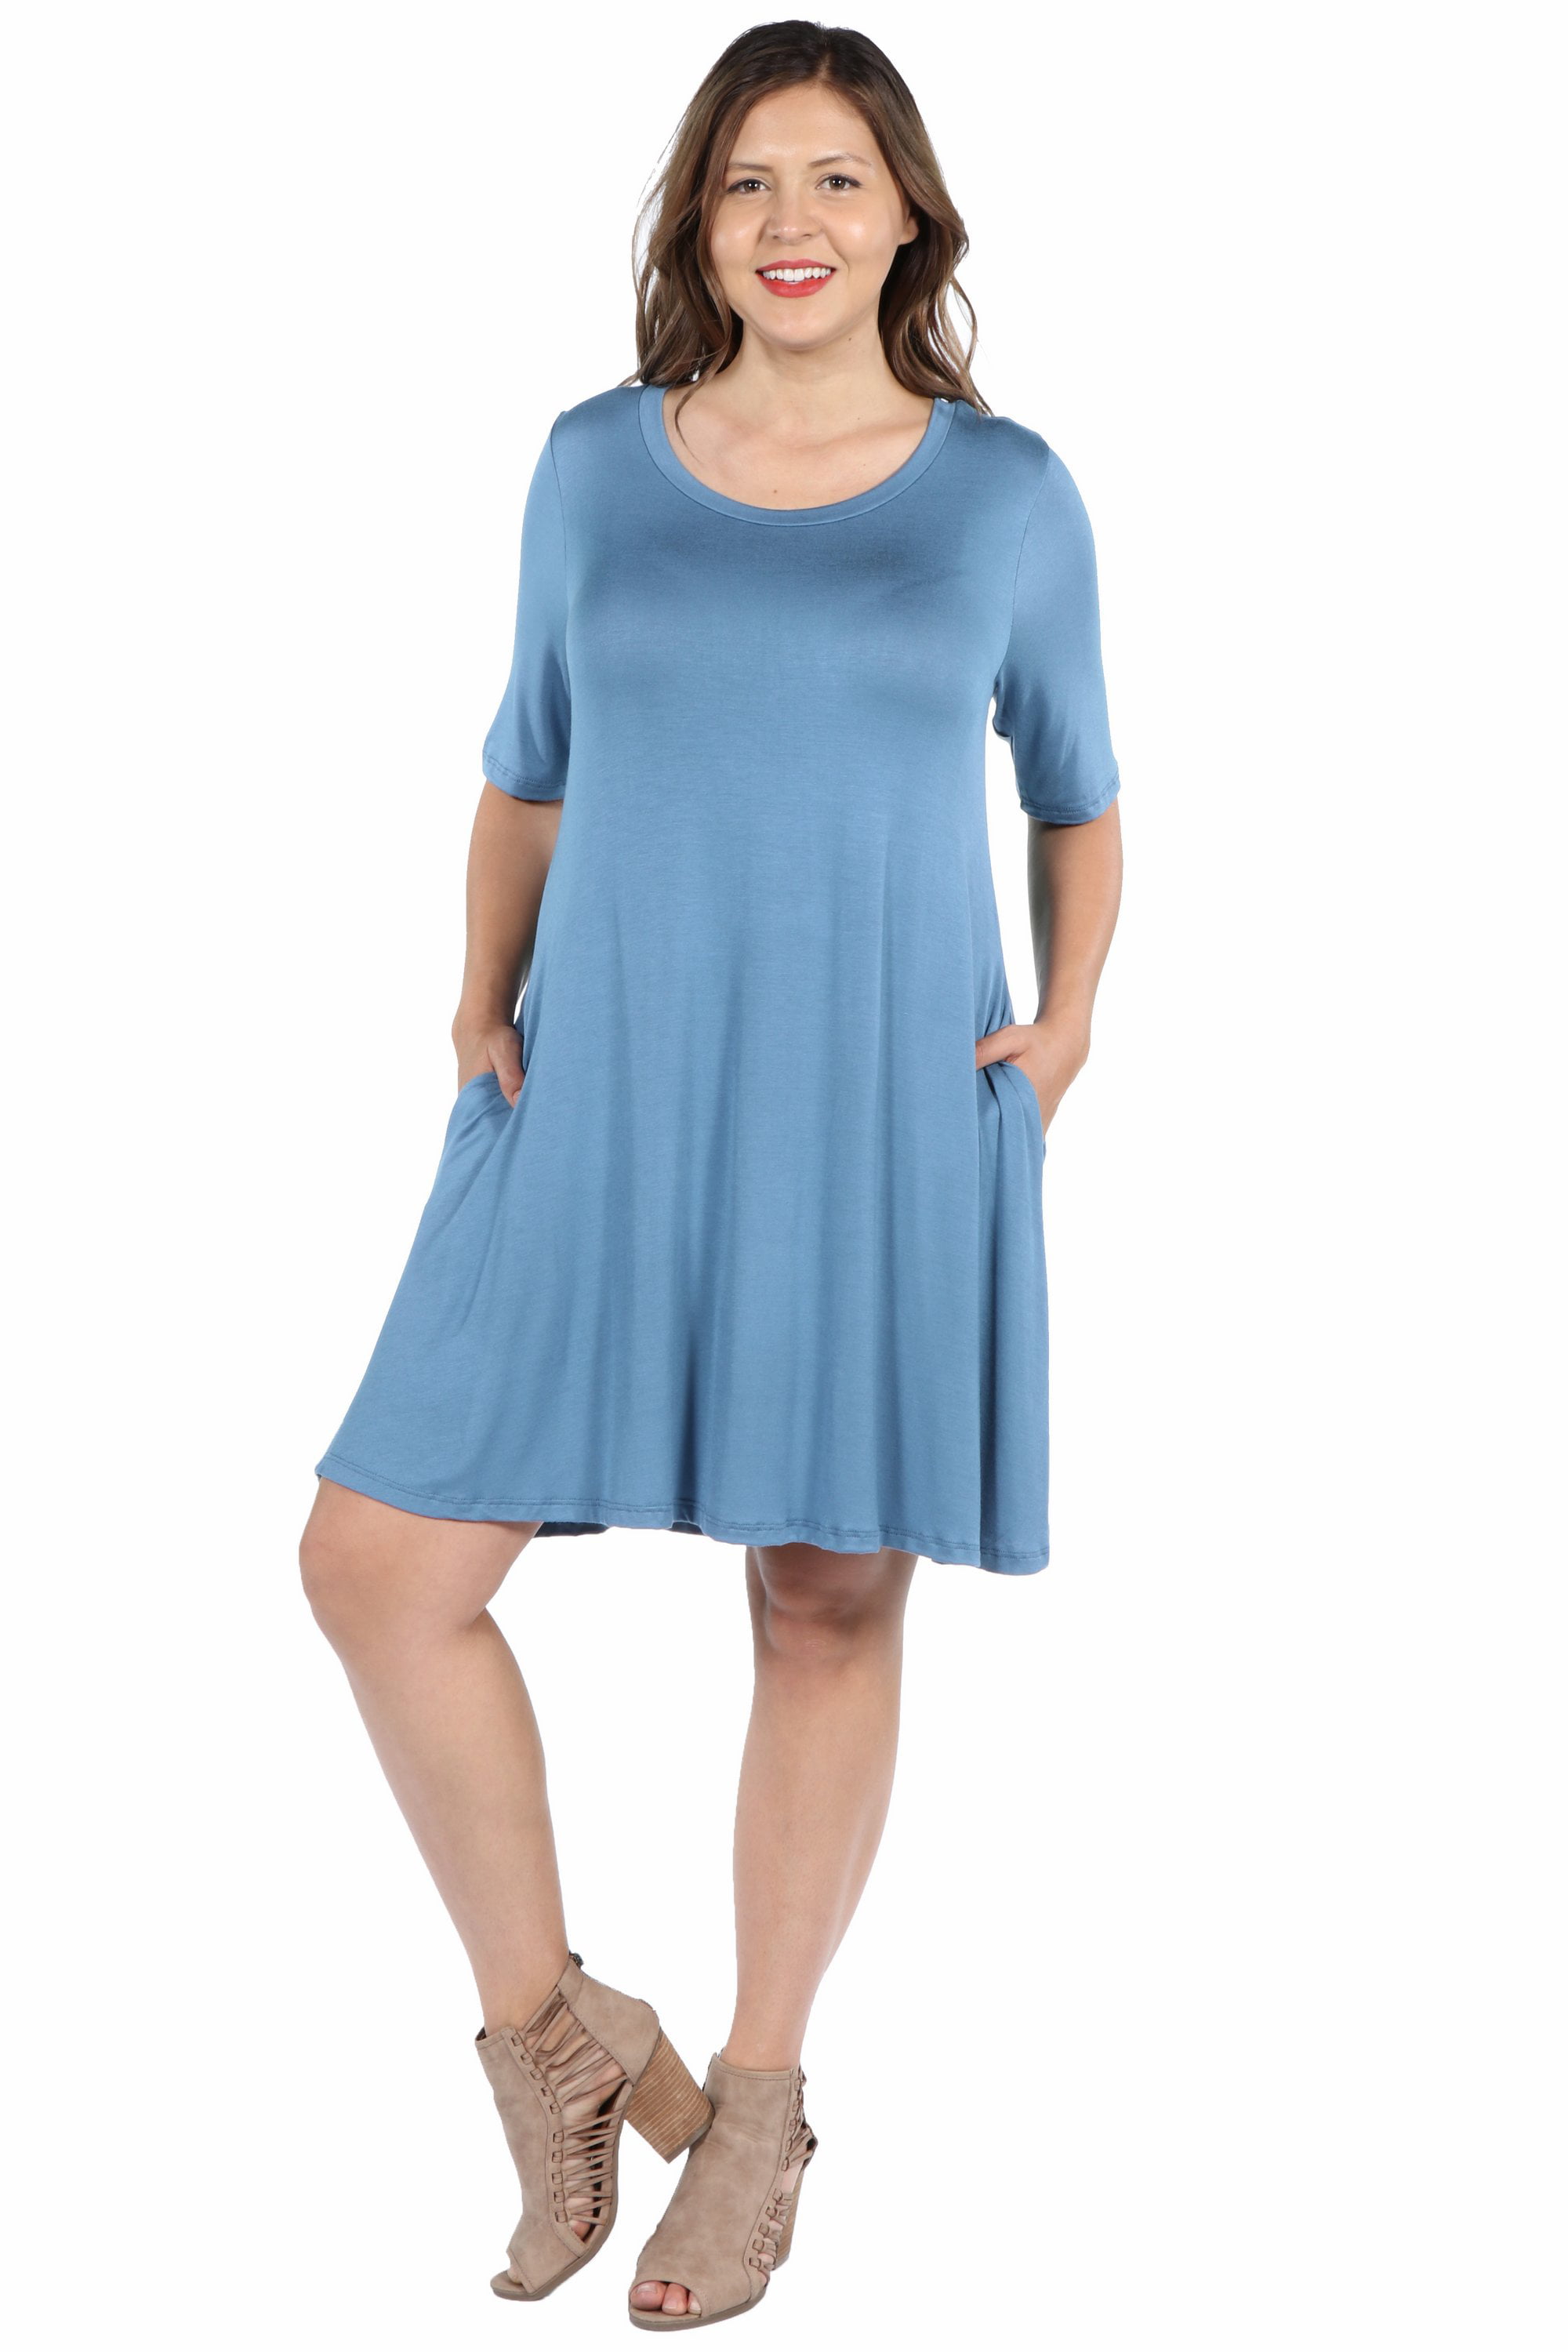 24/7 Comfort Apparel - Women’s Plus Size Knee Length Pocket T Shirt ...